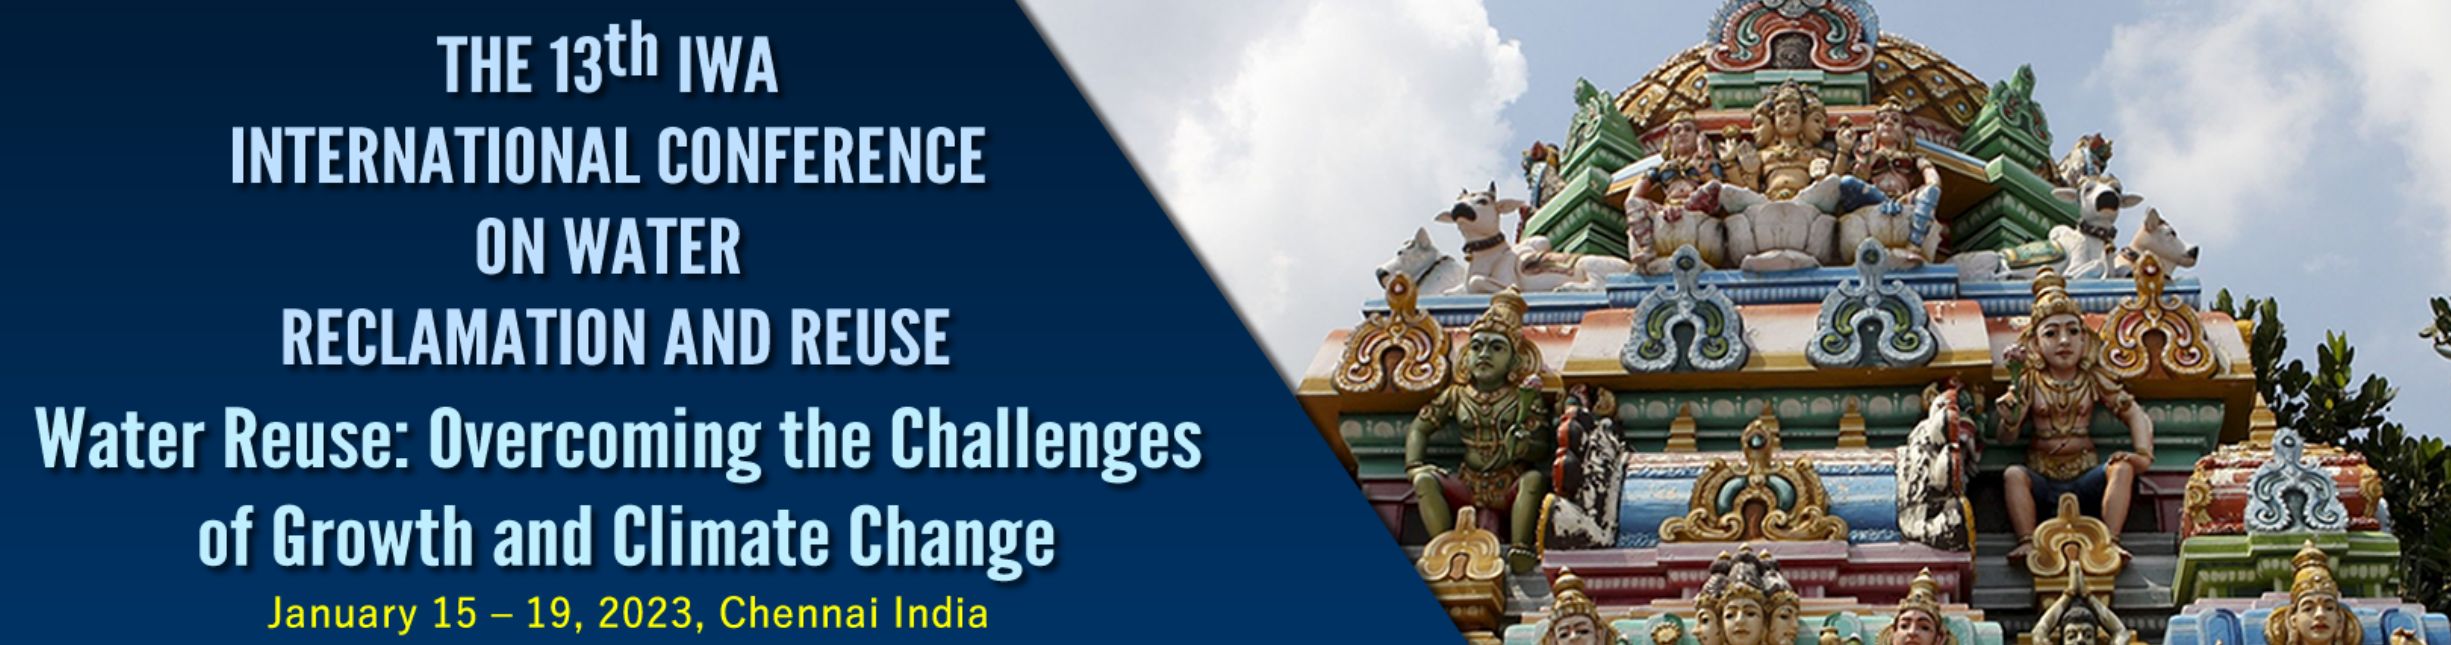 IWA Conference in Chennai